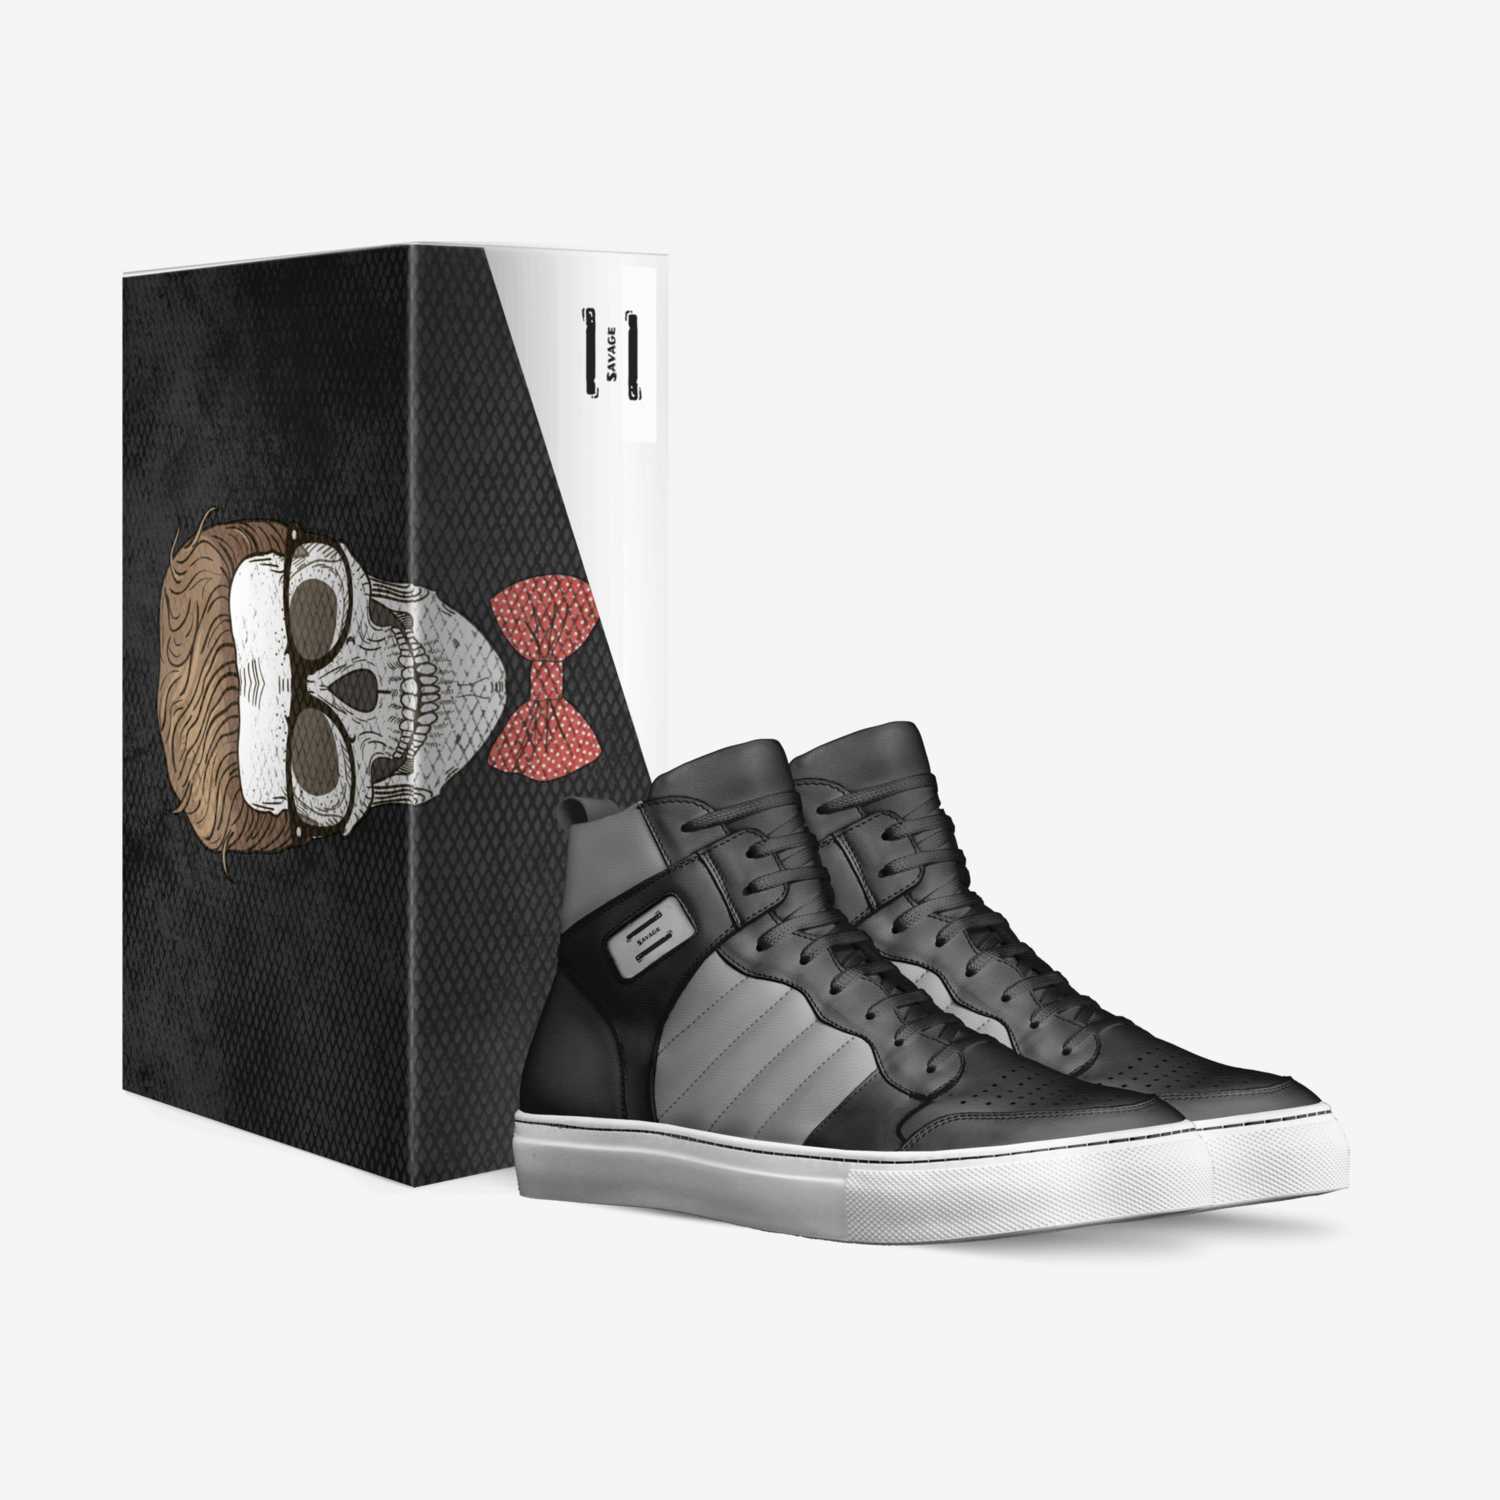 Joshua custom made in Italy shoes by Joshua Ruisech | Box view